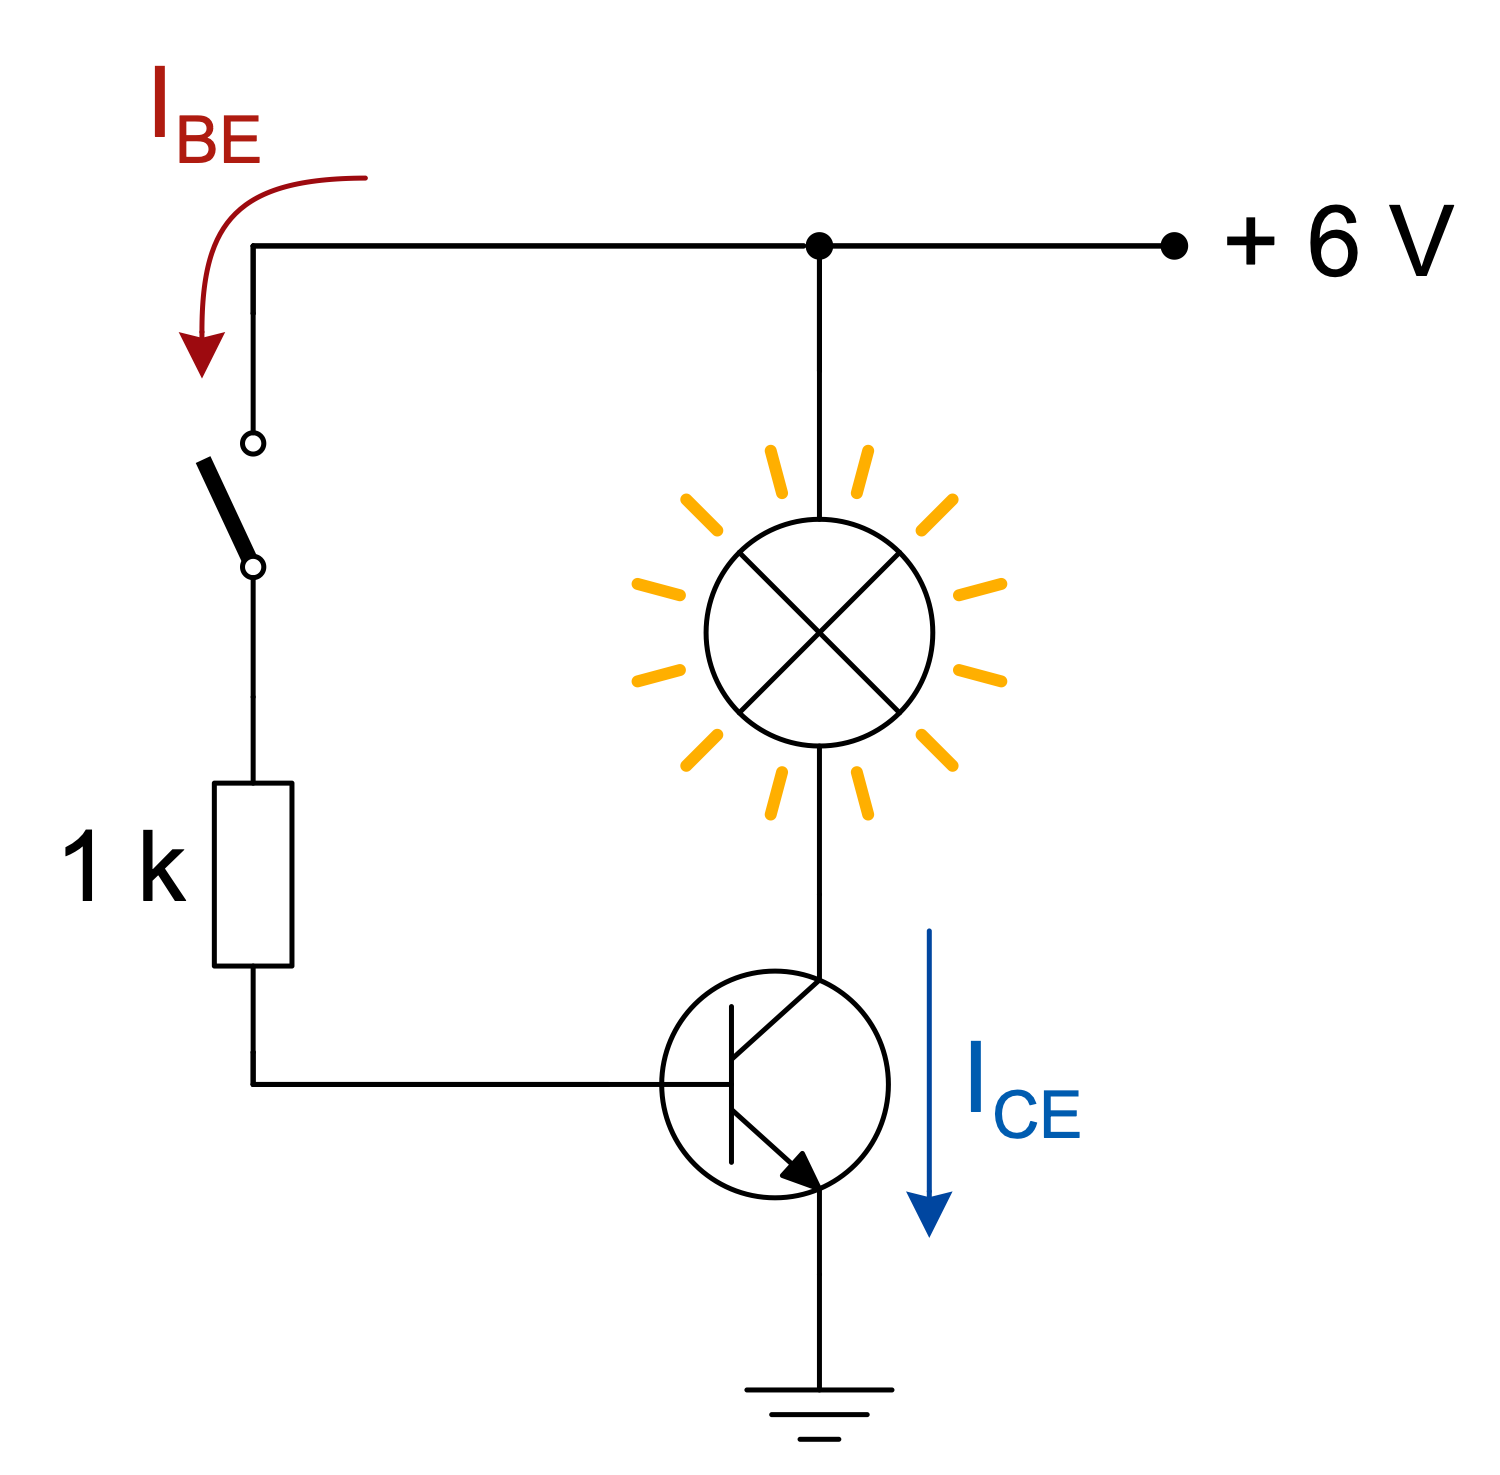 Transistor as Switch